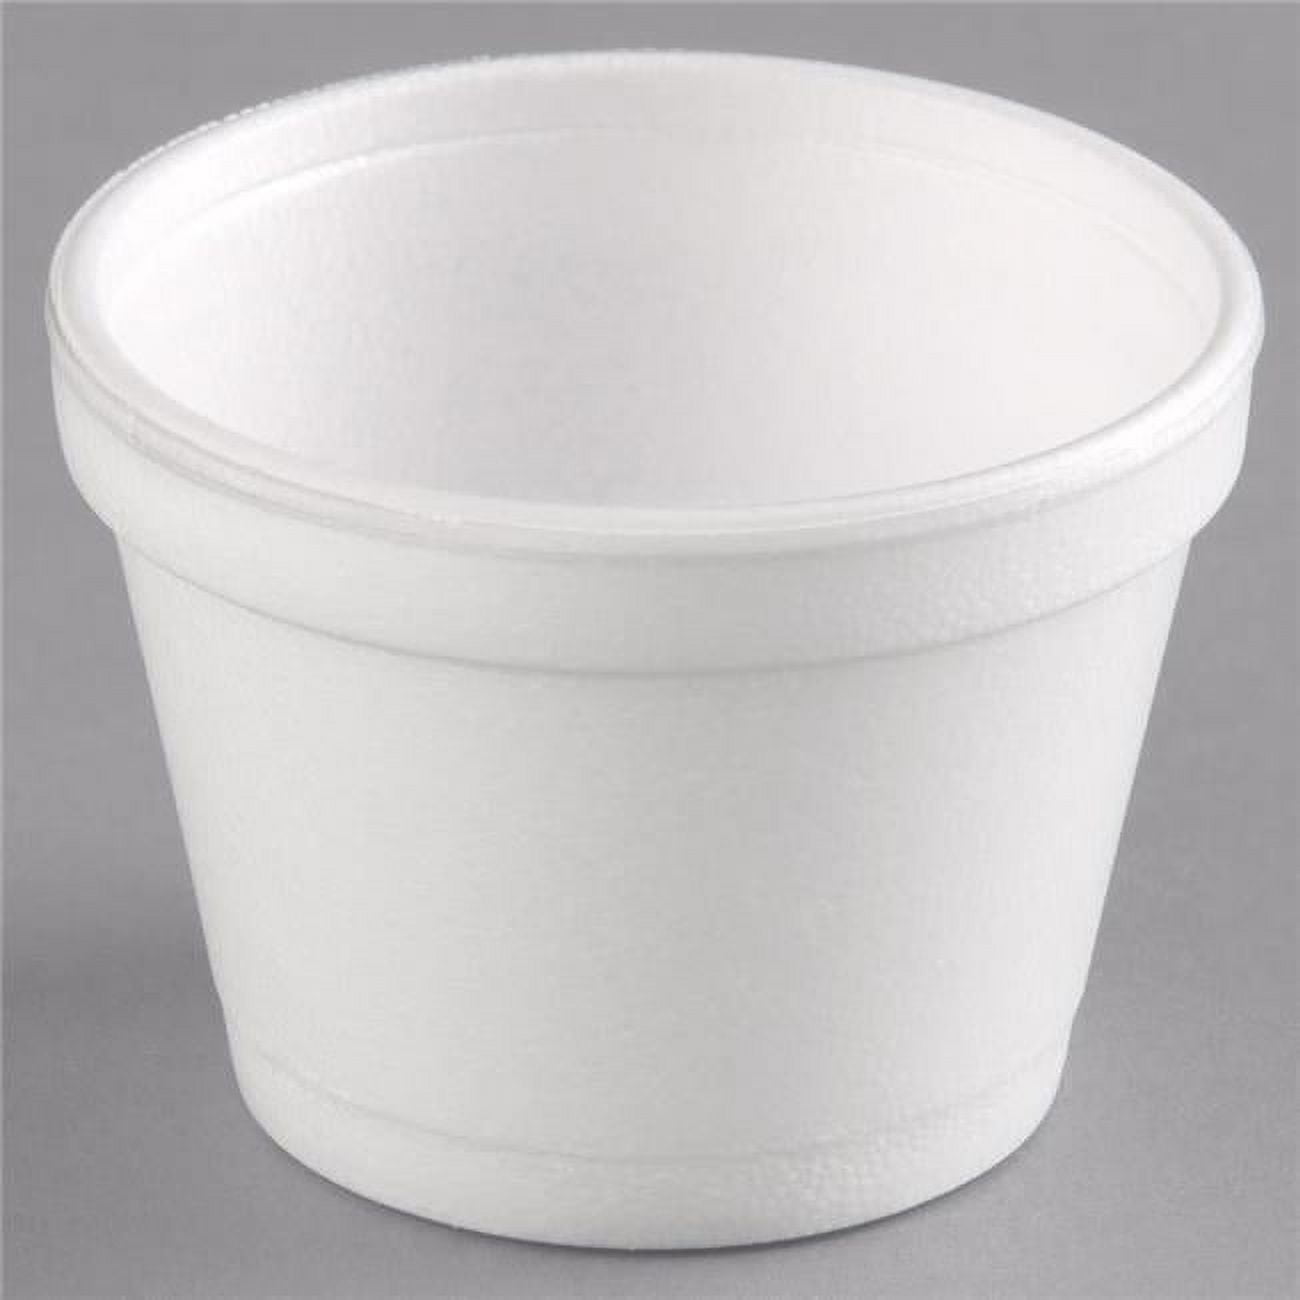 12sj20 Cpc 12 Oz Squat Food Container Foam - White, Case Of 500